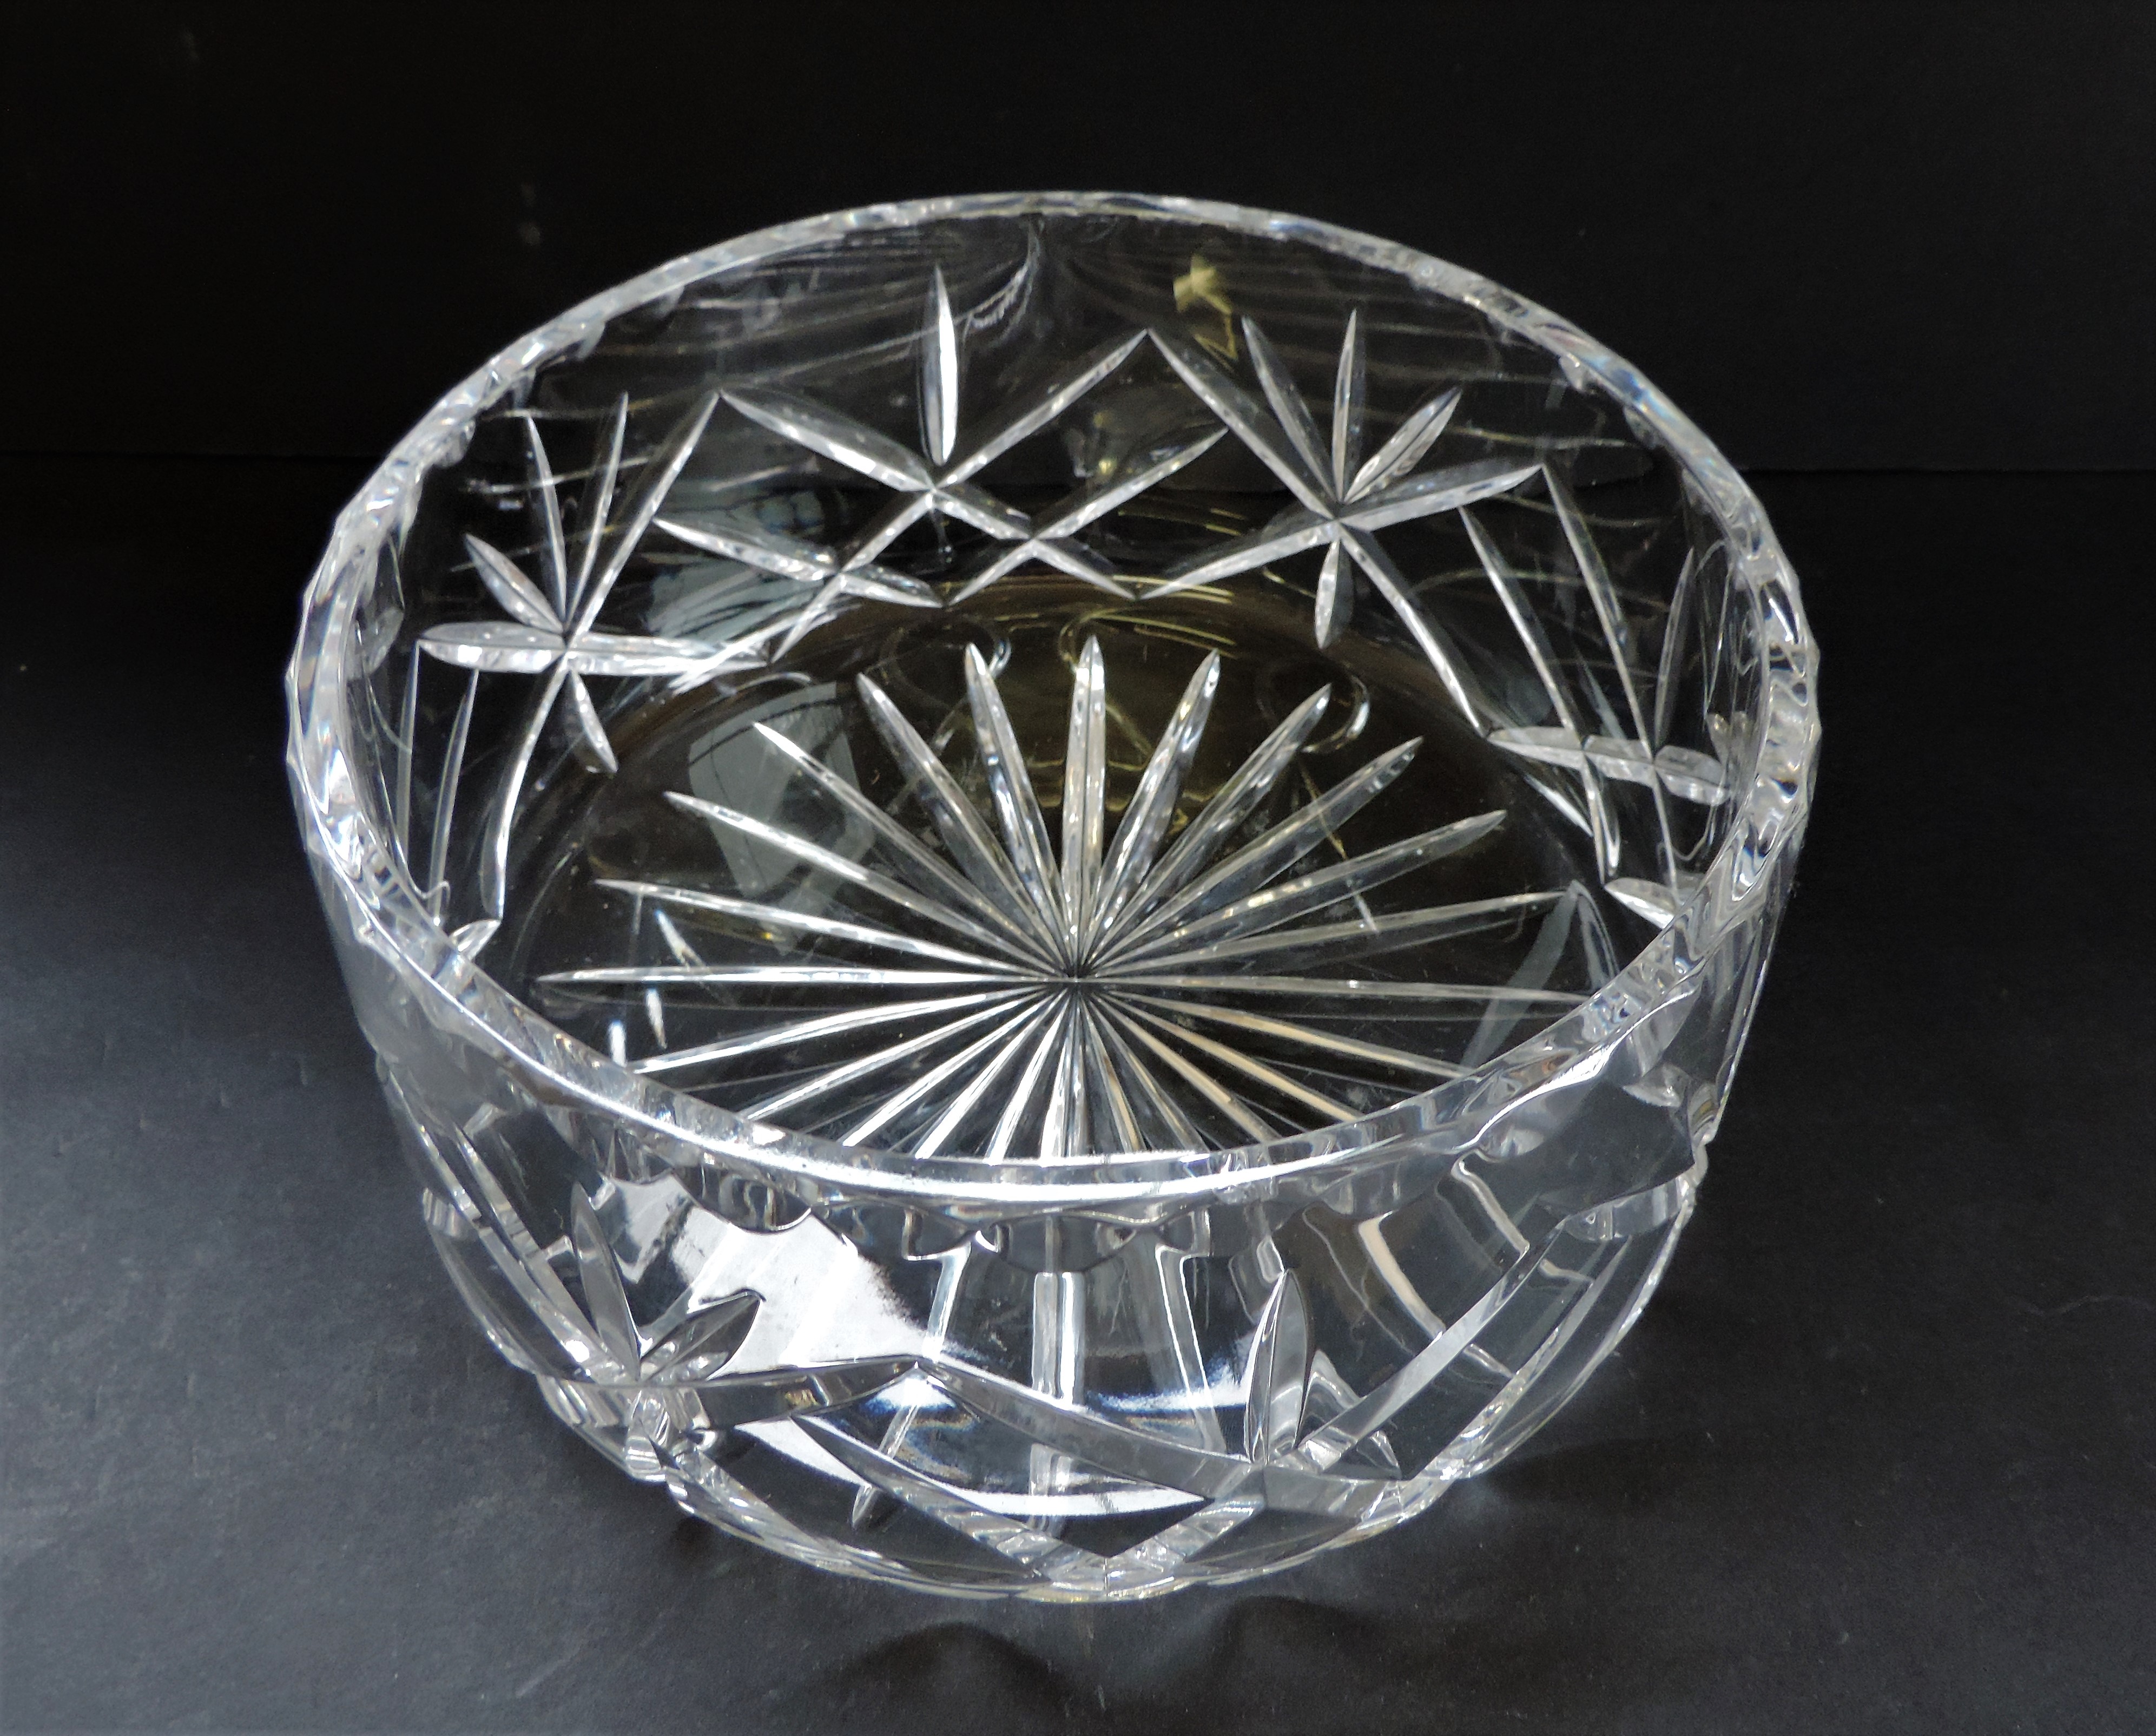 Vintage Crystal Bowl 20cm wide 10cm tall - Image 2 of 3